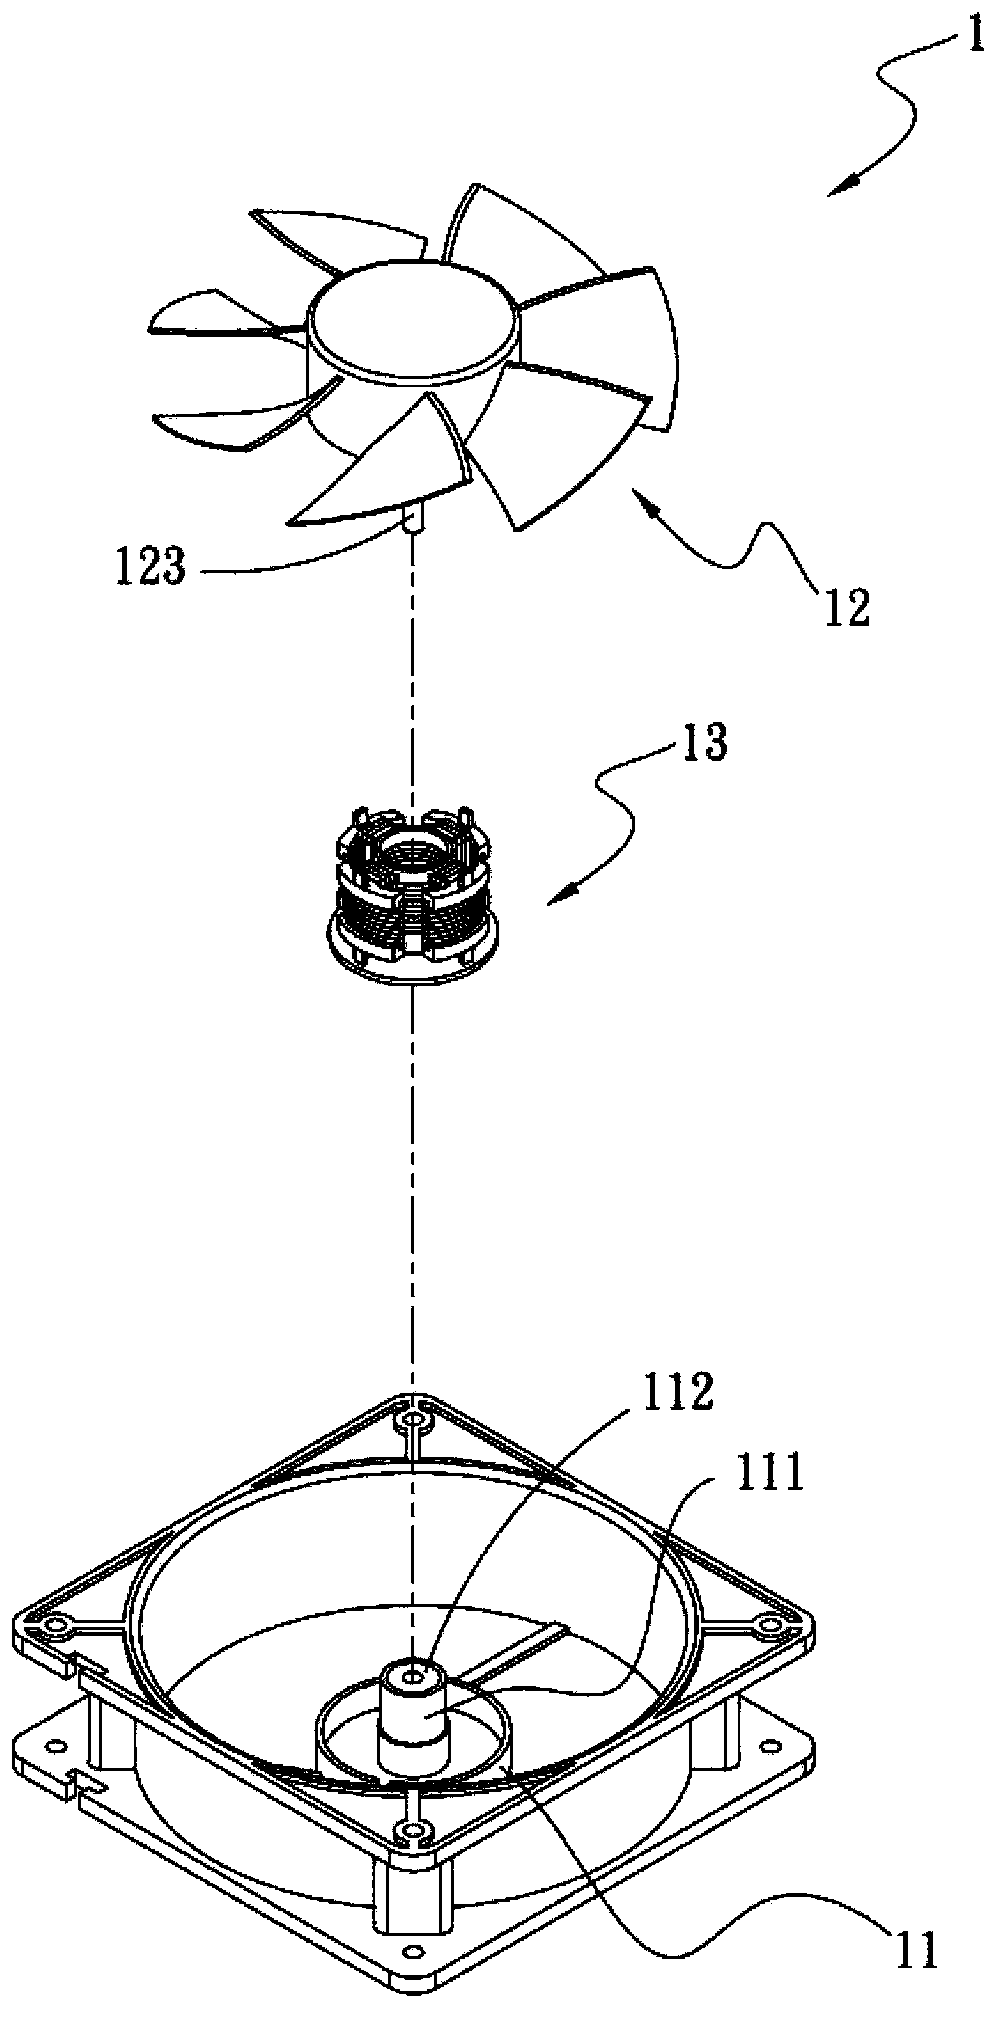 Combination method of shaft barrel and bearing